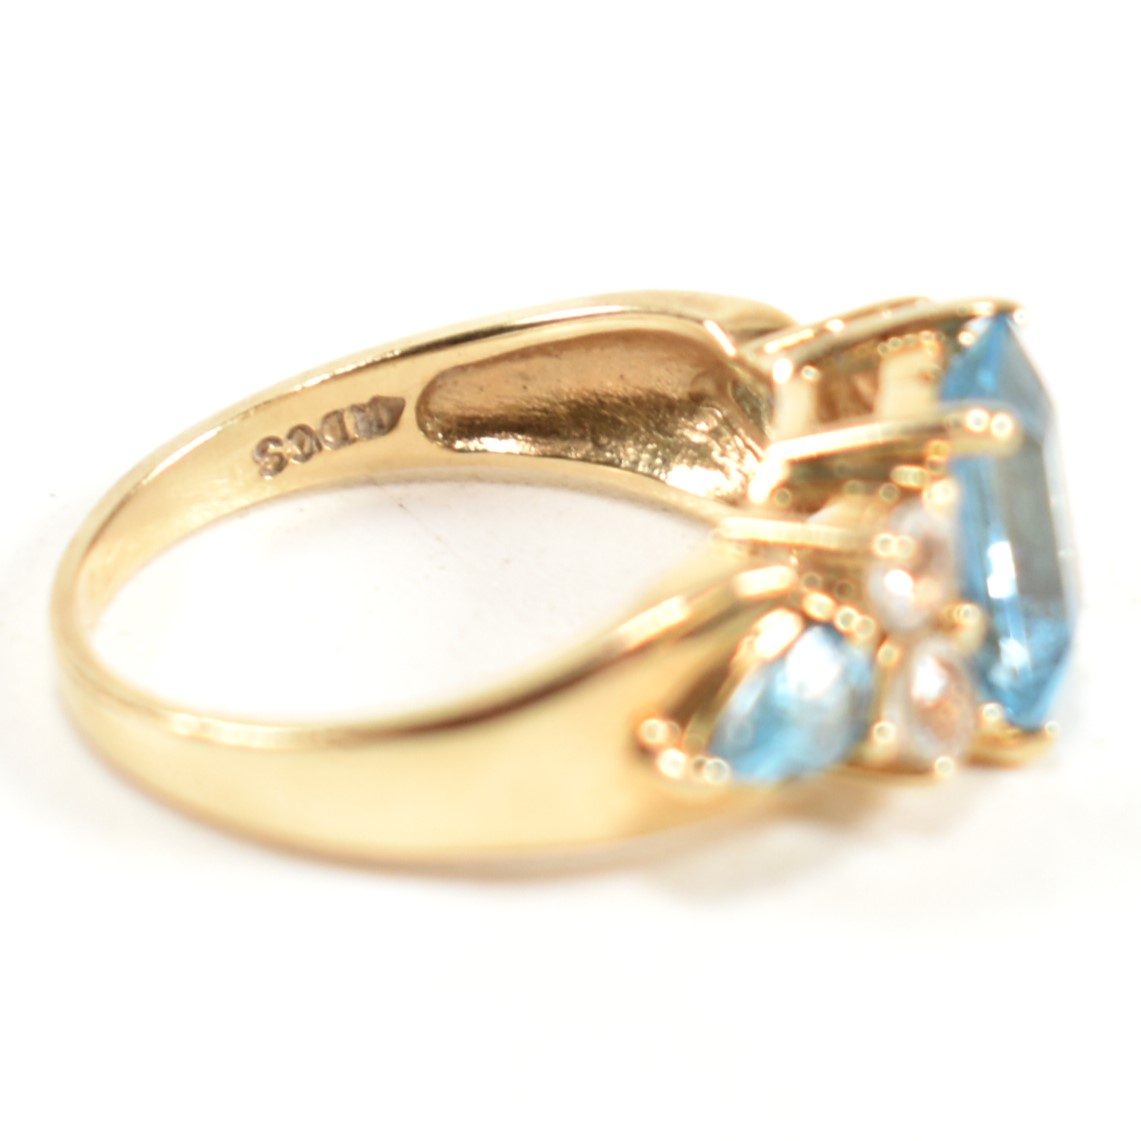 HALLMARKED 9CT GOLD & BLUE & WHITE TOPAZ RING - Image 5 of 8